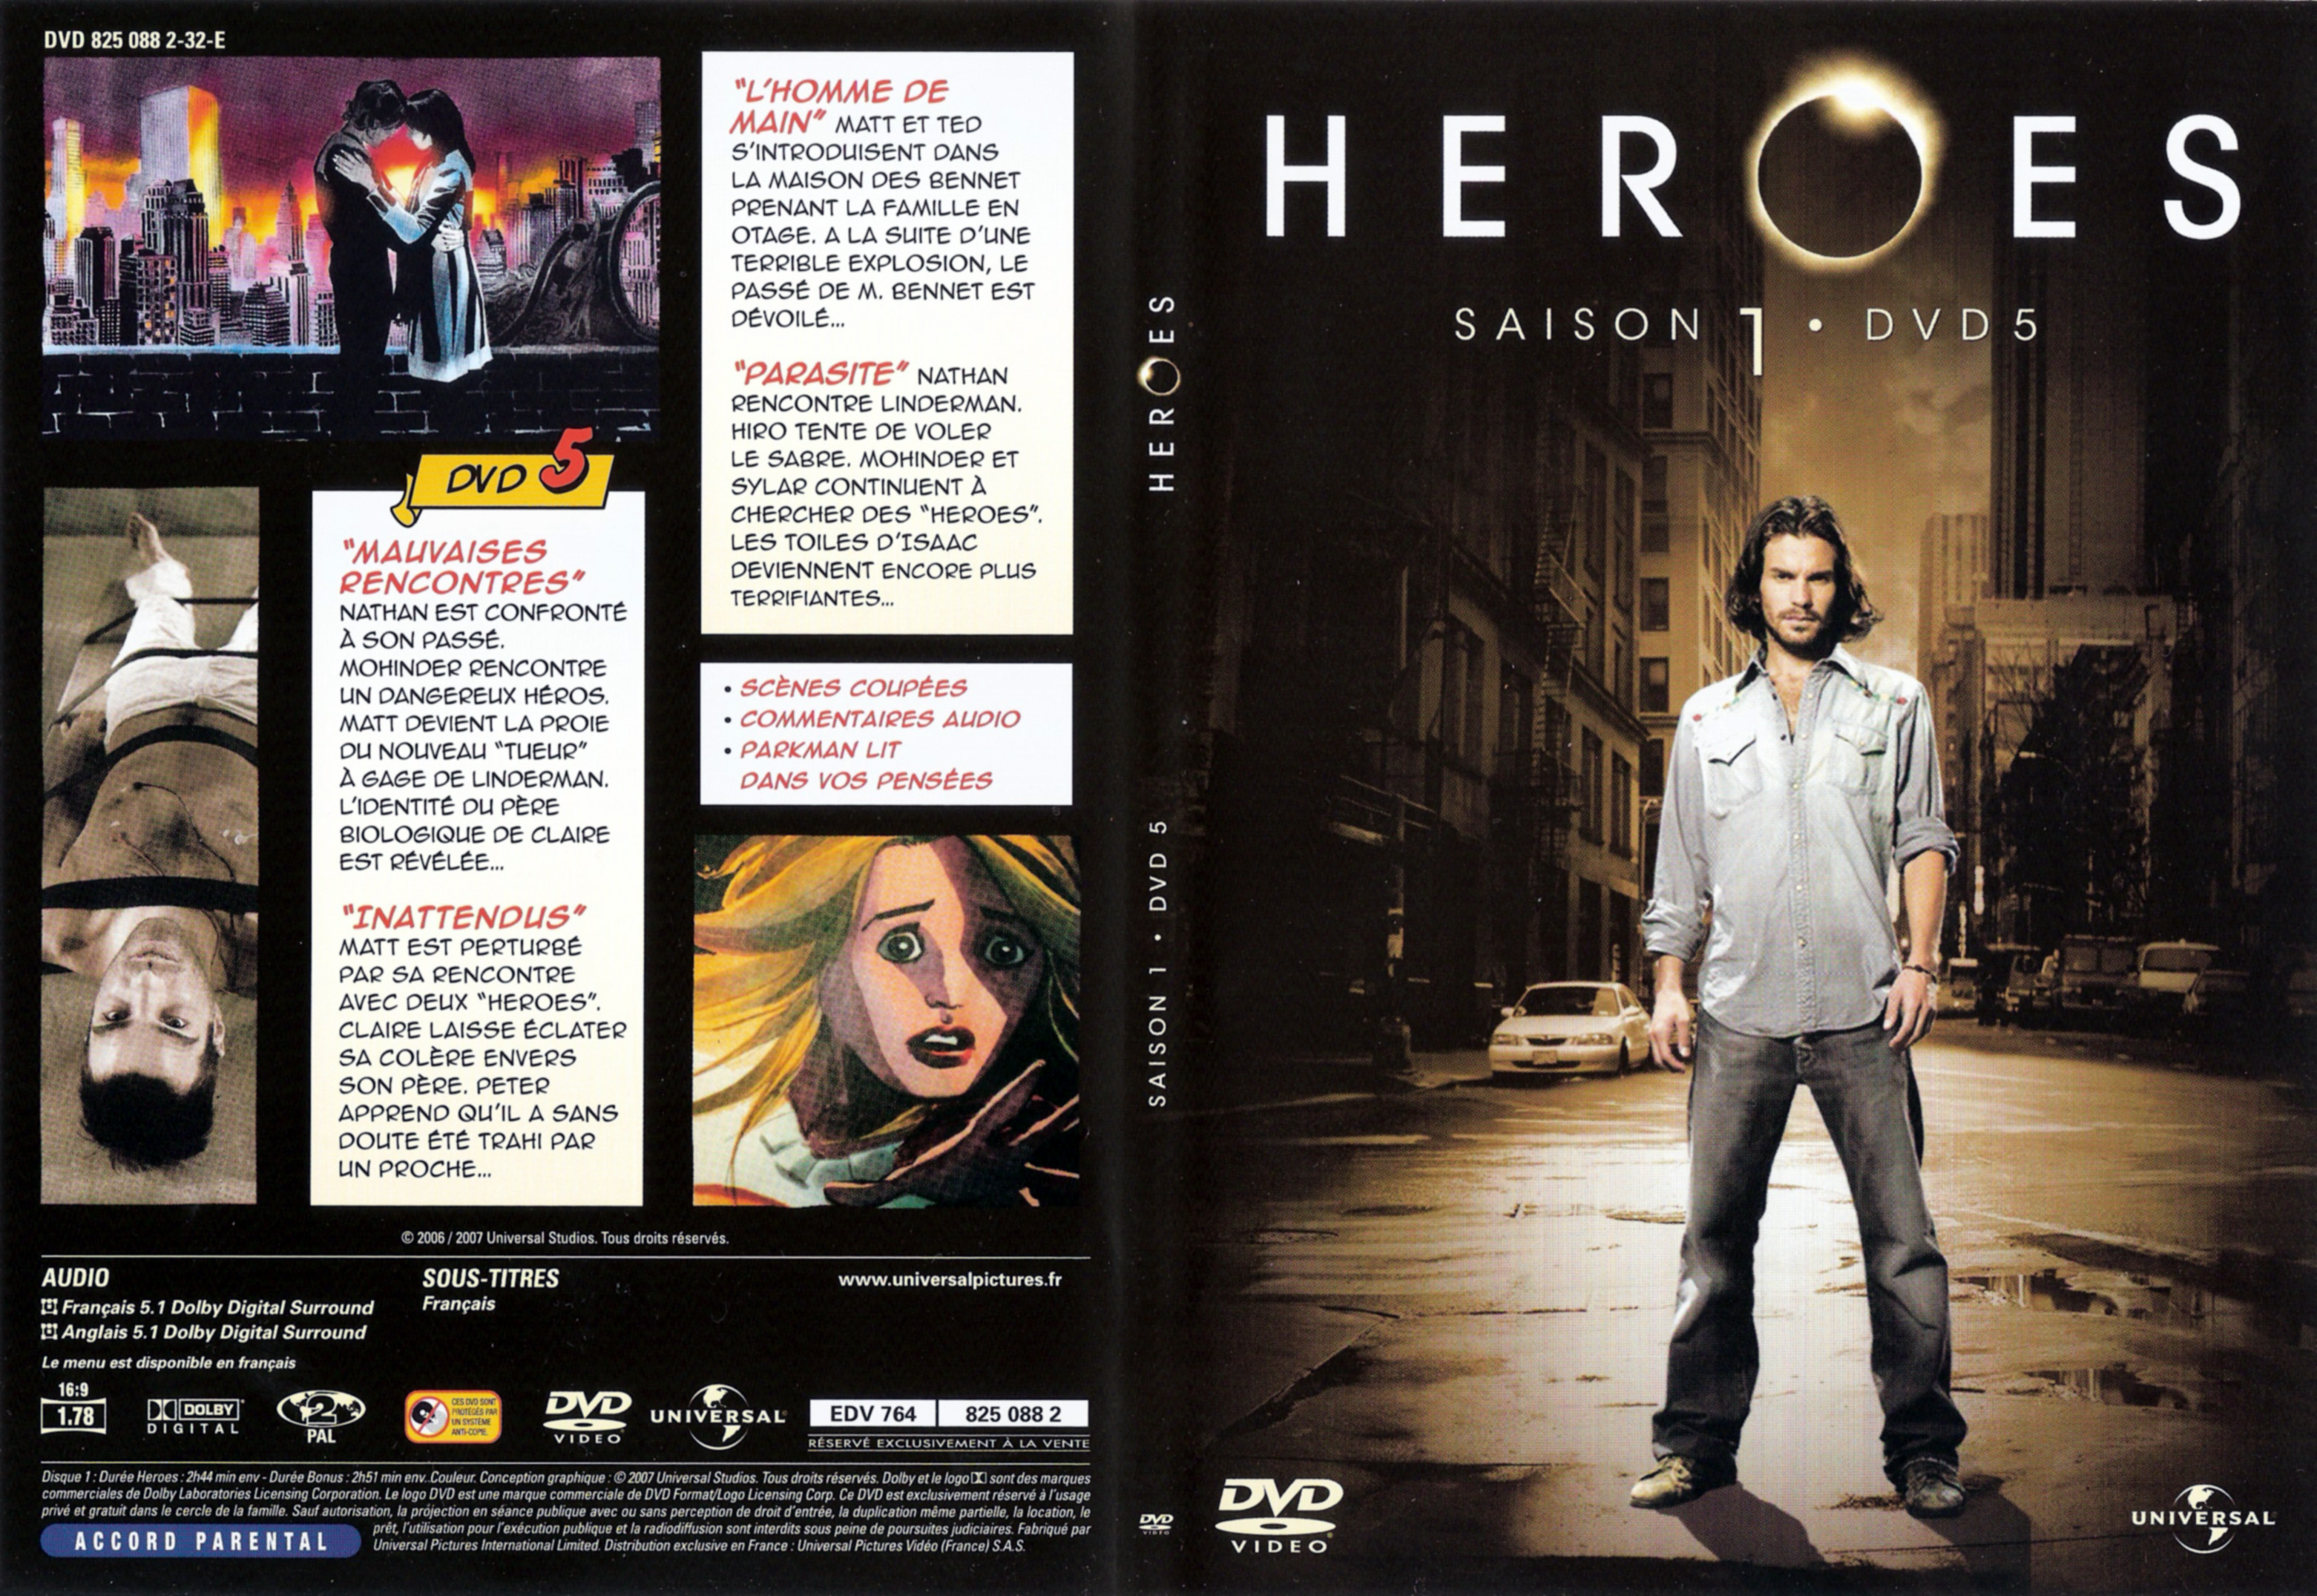 Jaquette DVD Heroes saison 1 DVD 5